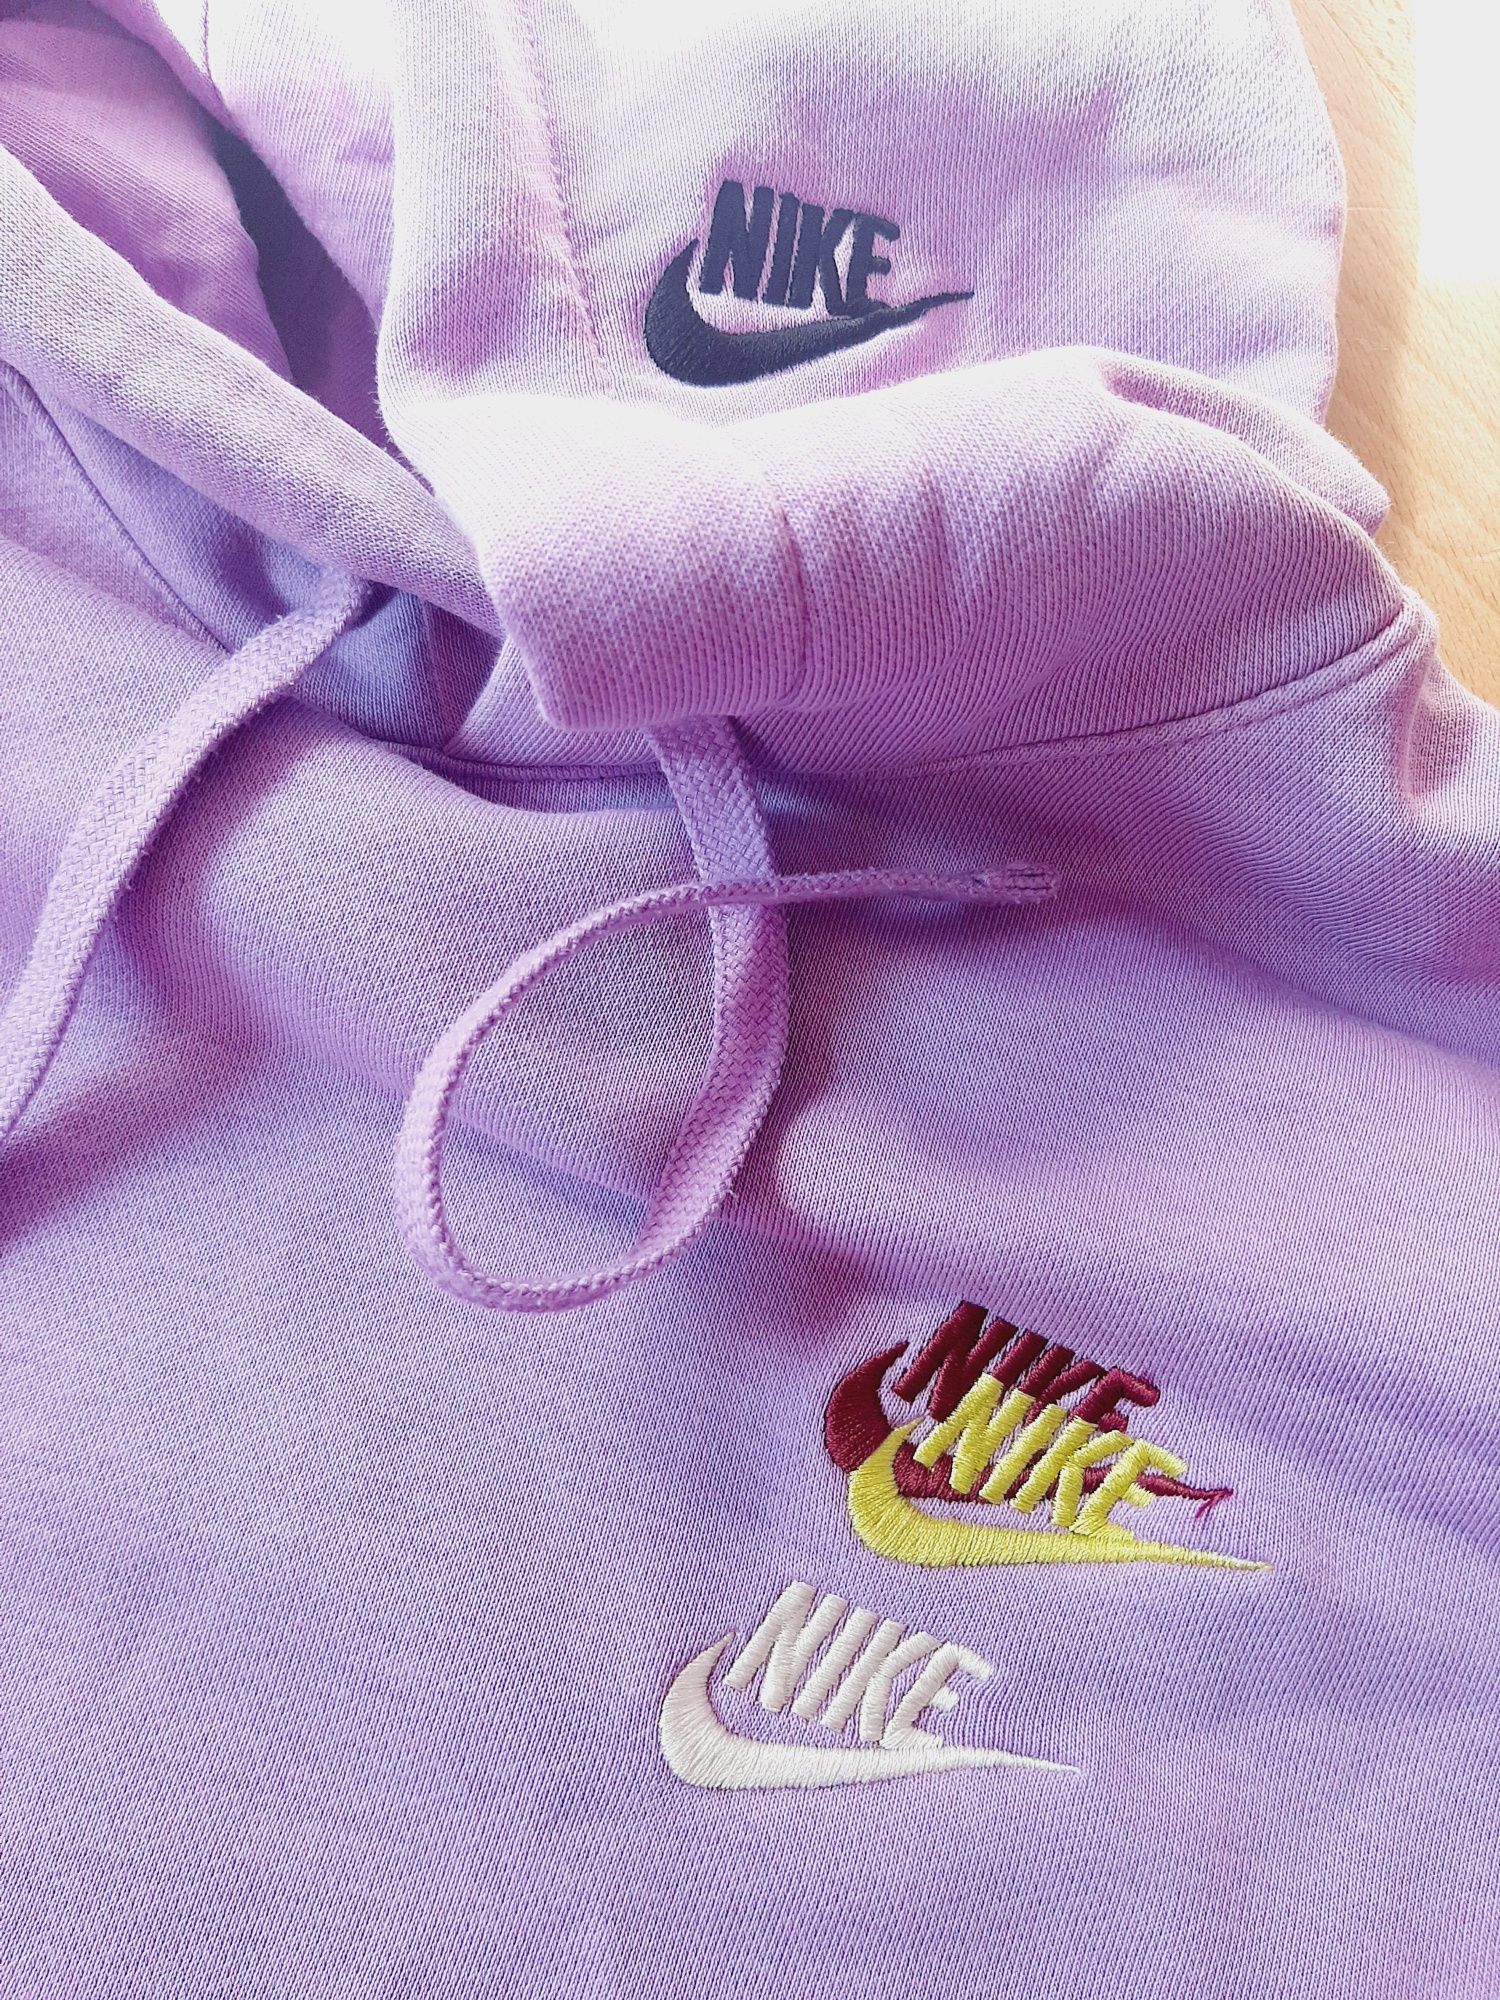 Bluza Nike Air liliowa S promocja dzis